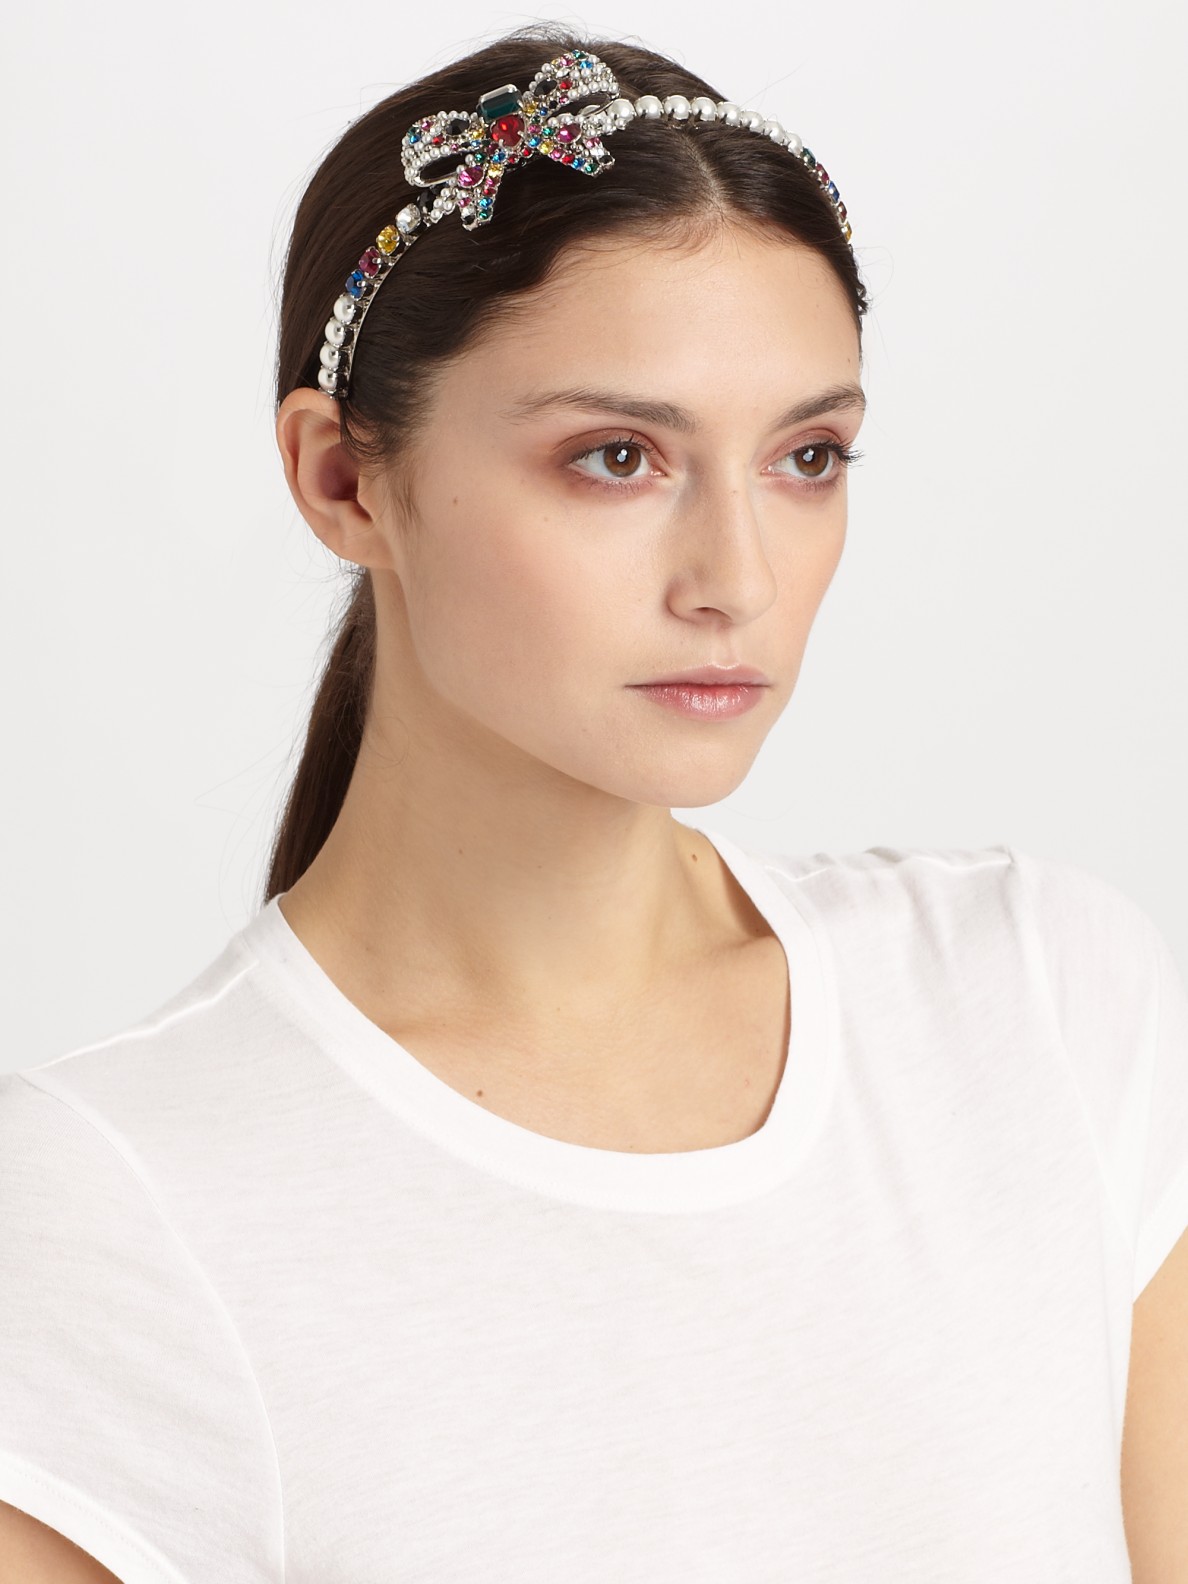 Lyst - Miu Miu Swarovski Crystal Accented Bow Headband in 